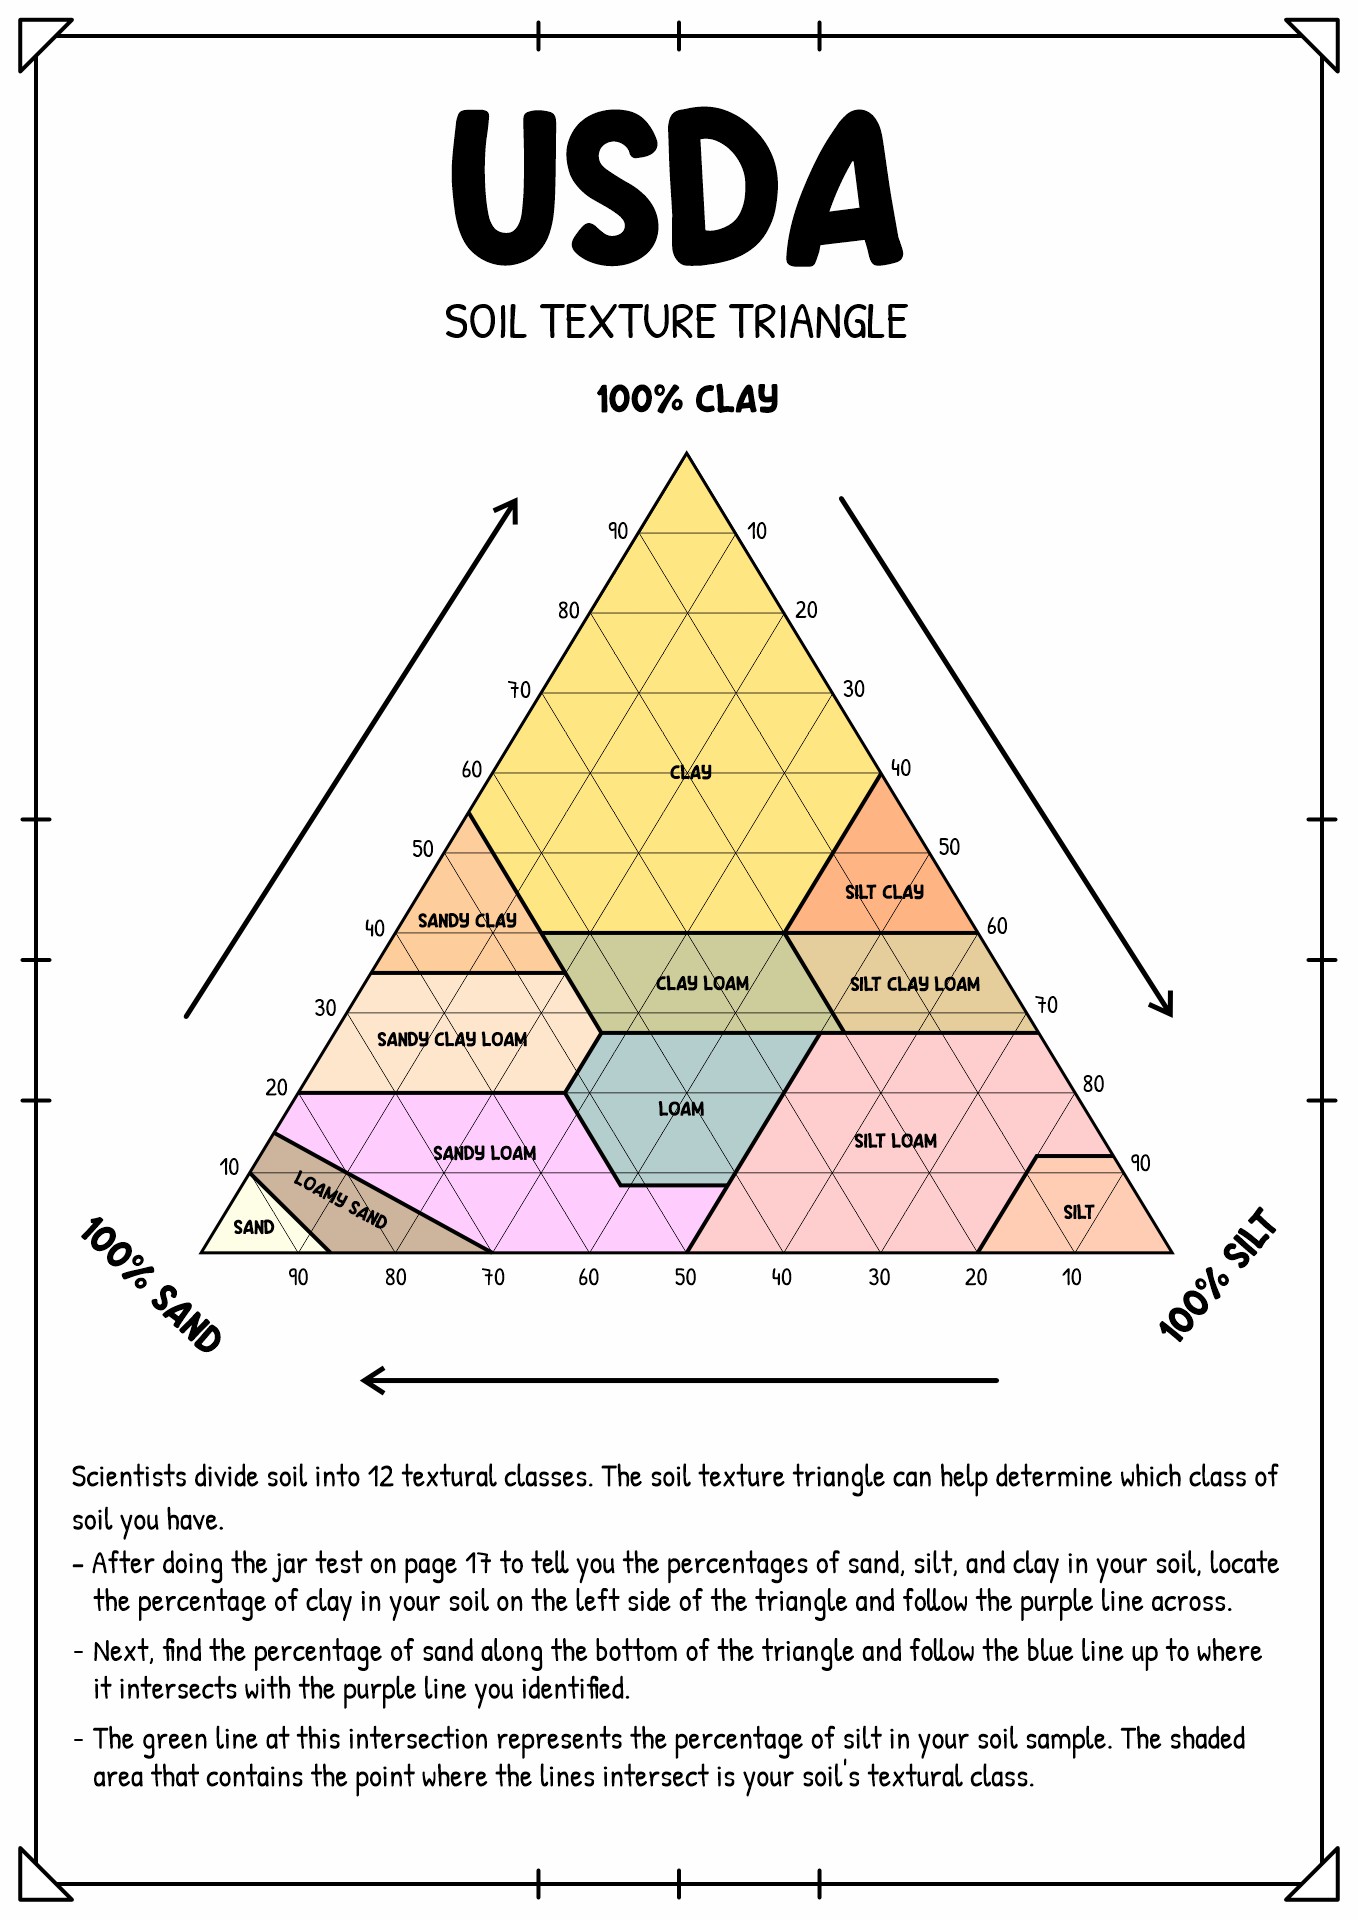 USDA Soil Texture Triangle